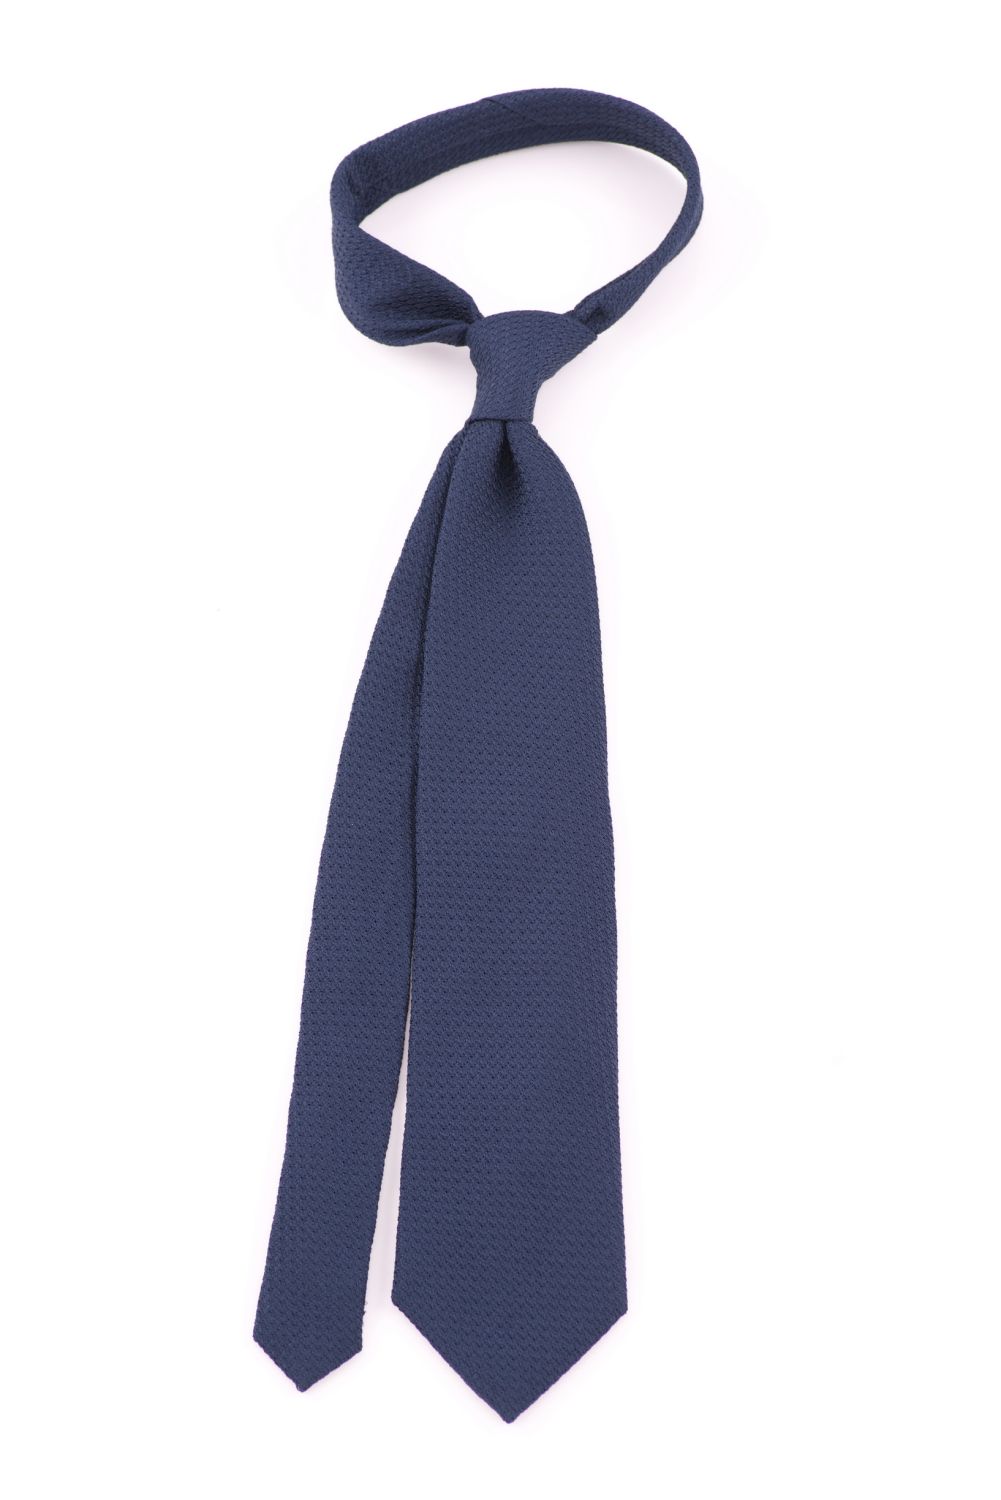 Grenadine Tie in Navy Blue Silk Handmade by Fort Belvedere